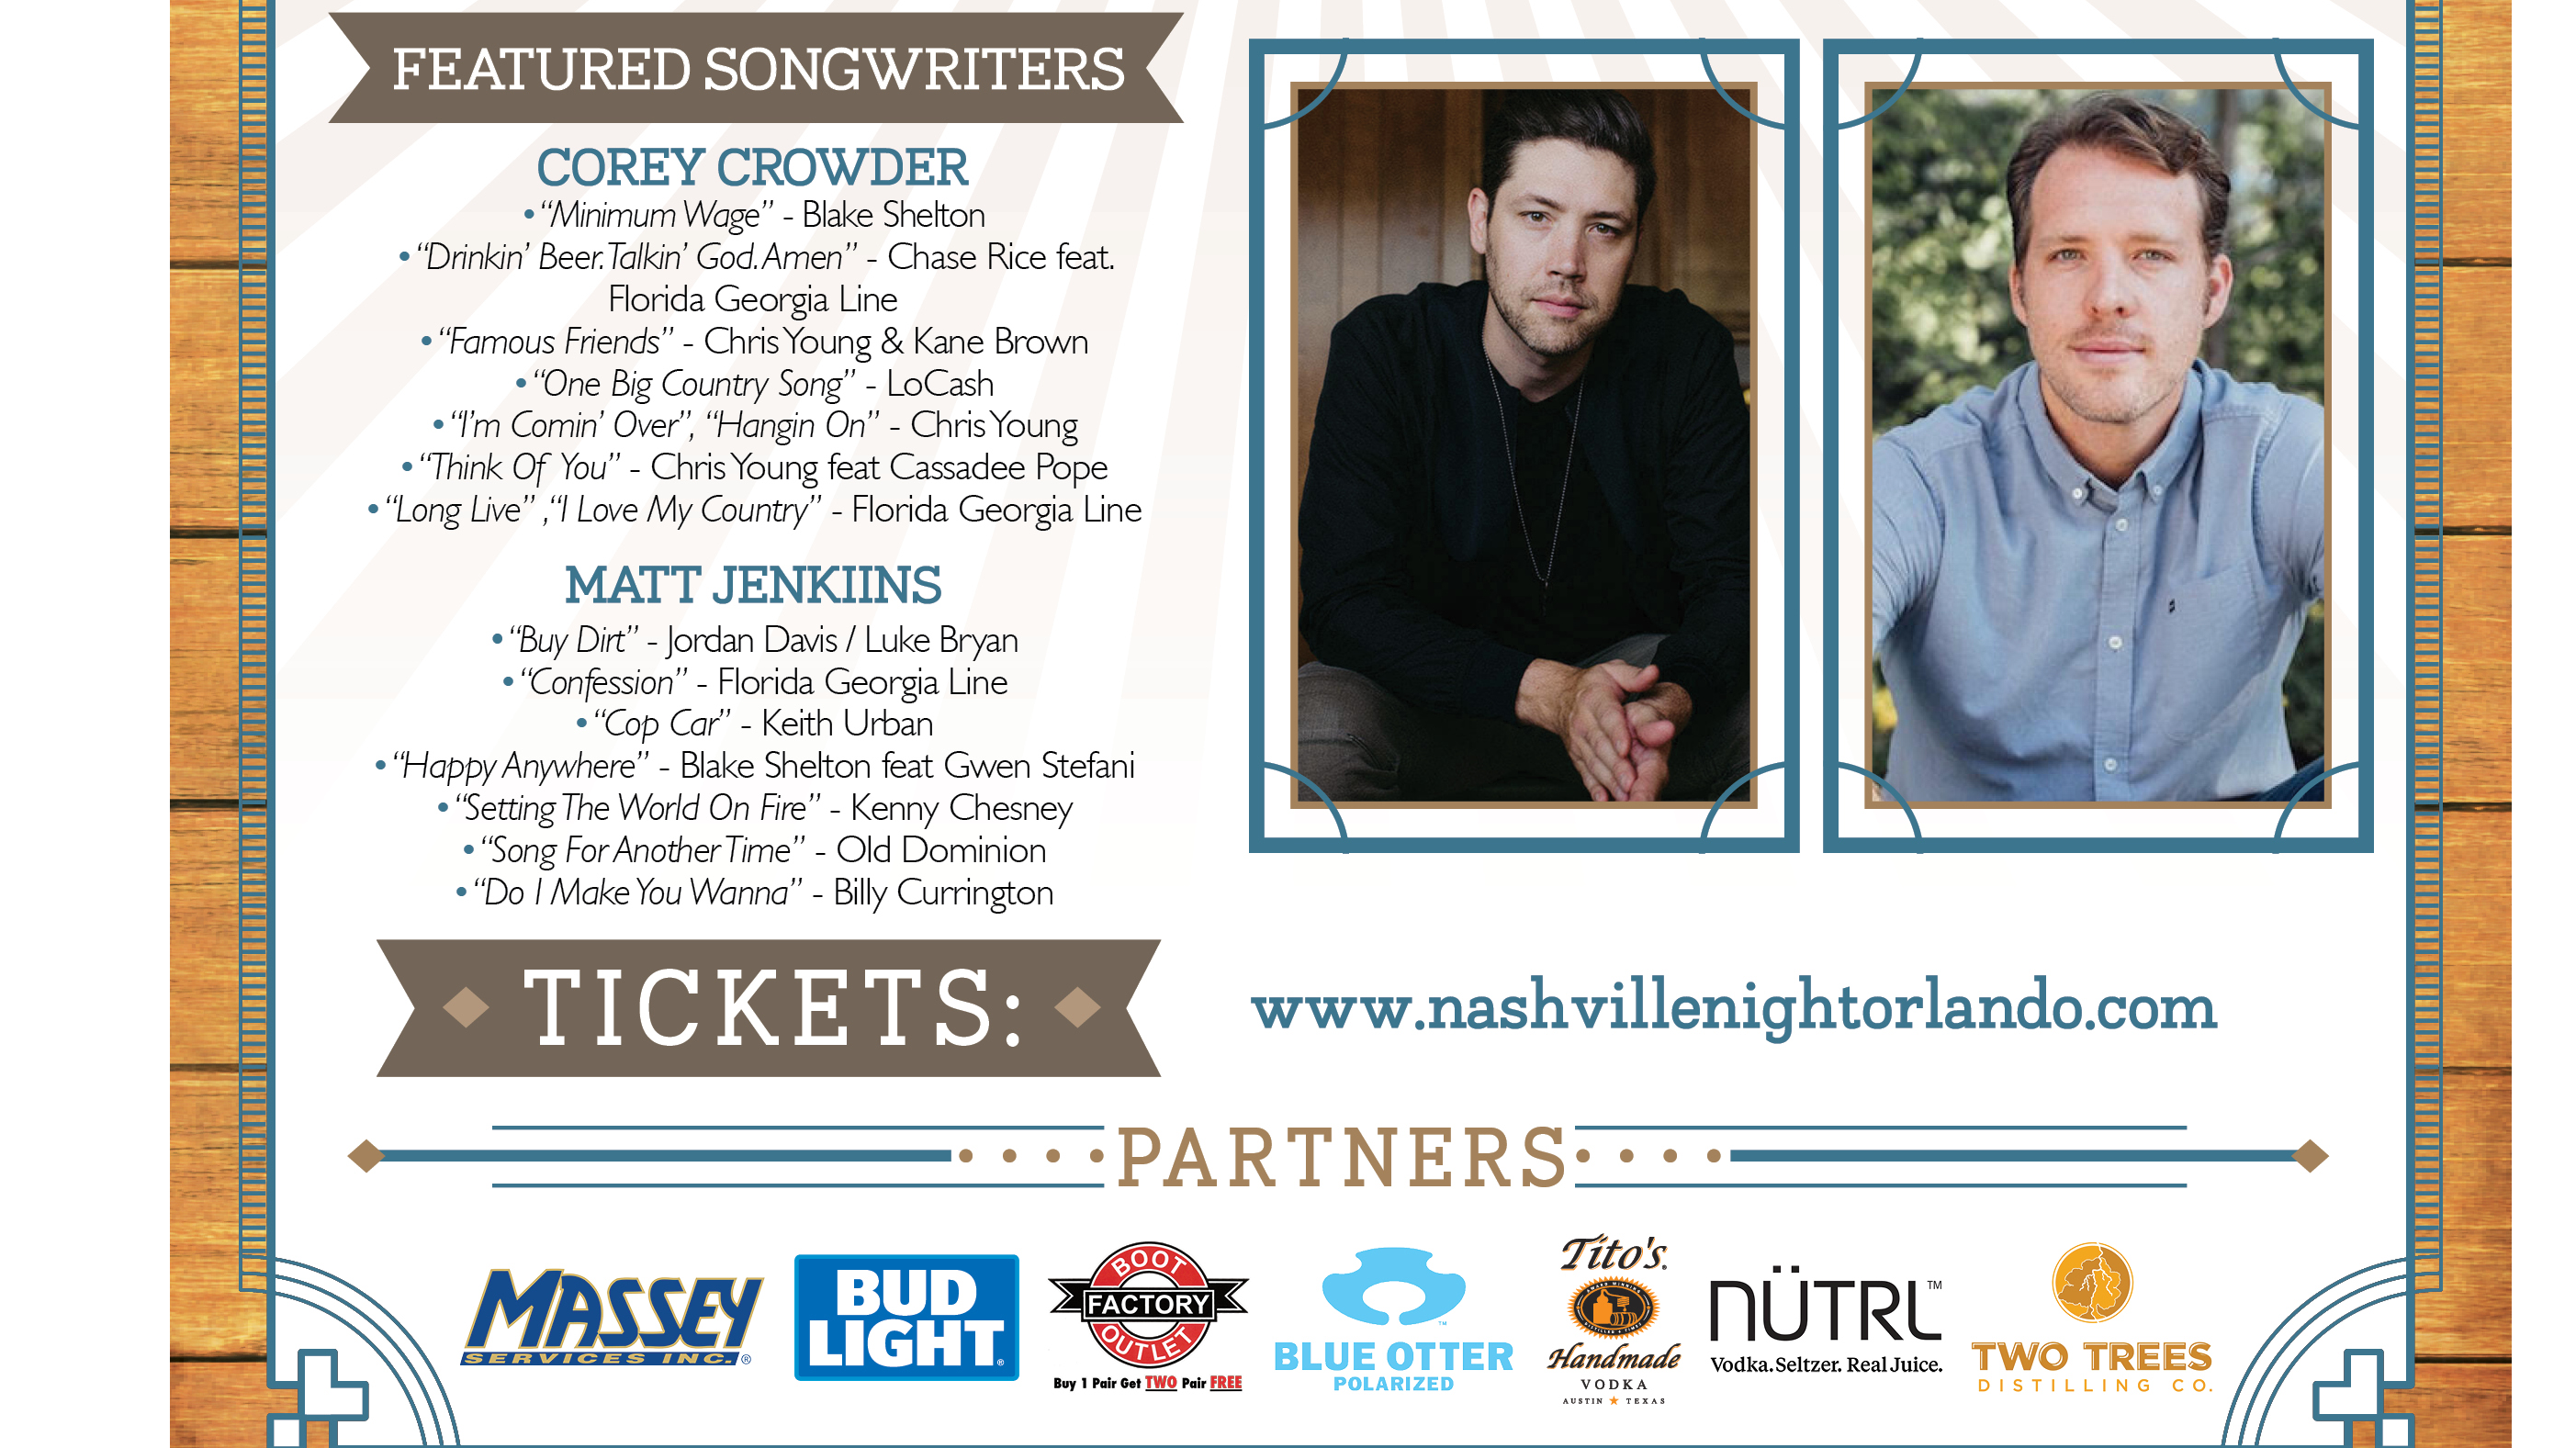 Photo for Nashville Night In Orlando w/ Matt Jenkiins and Corey Crowder on ViewStub